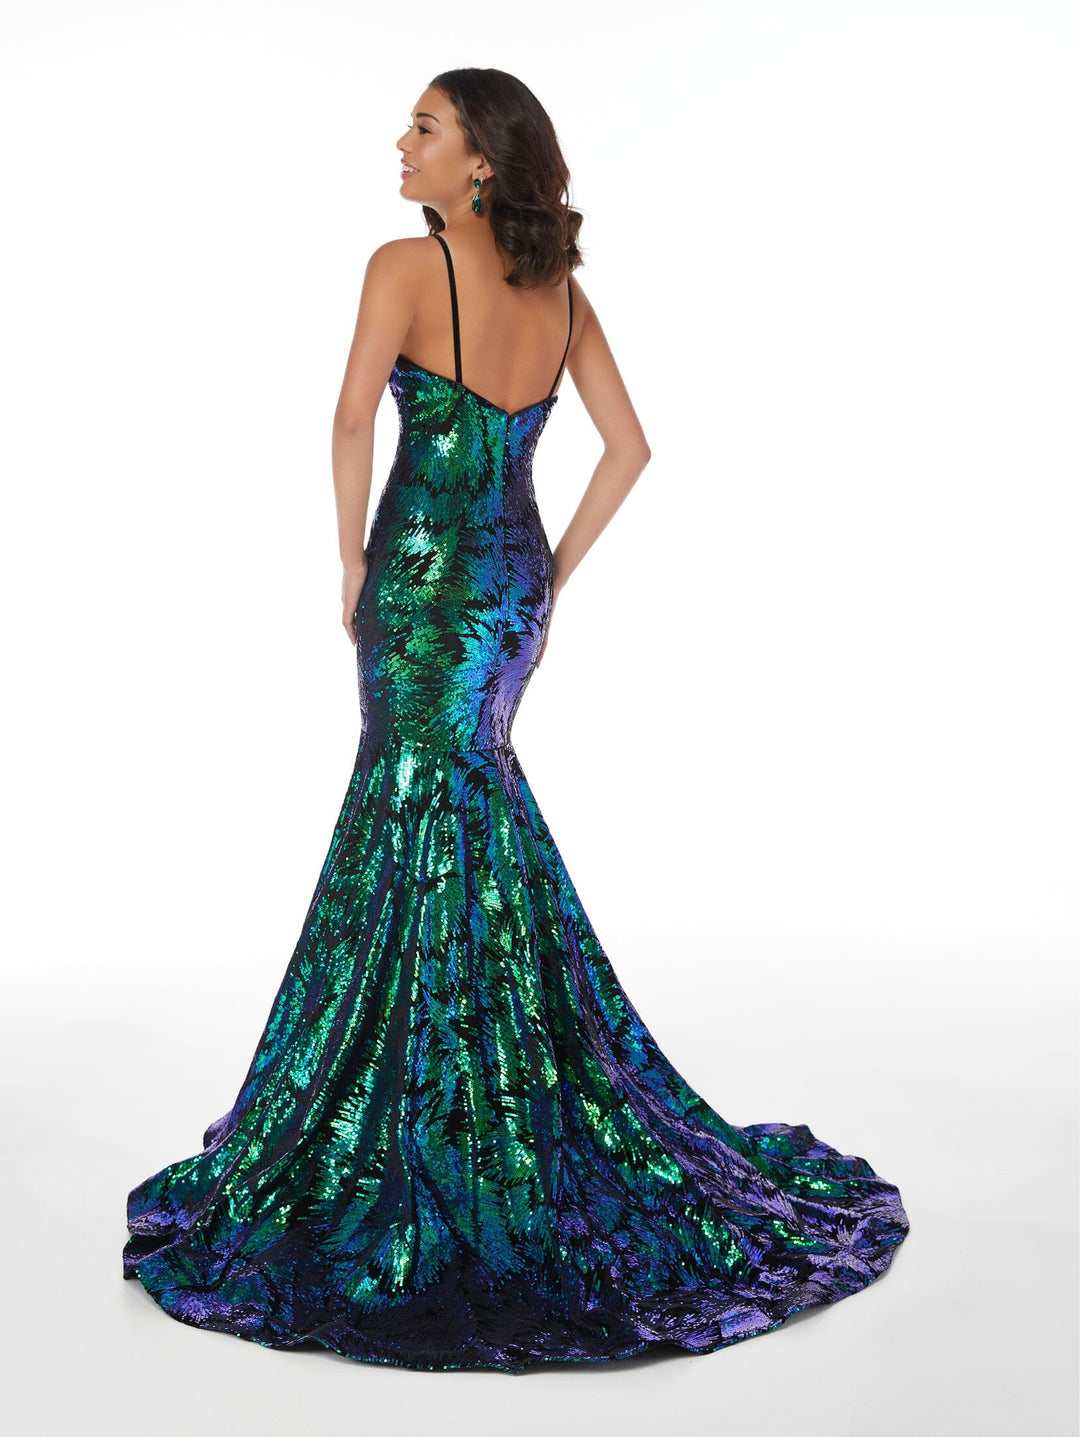 Iridescent Sequin Print Mermaid Dress by Studio 17 12852